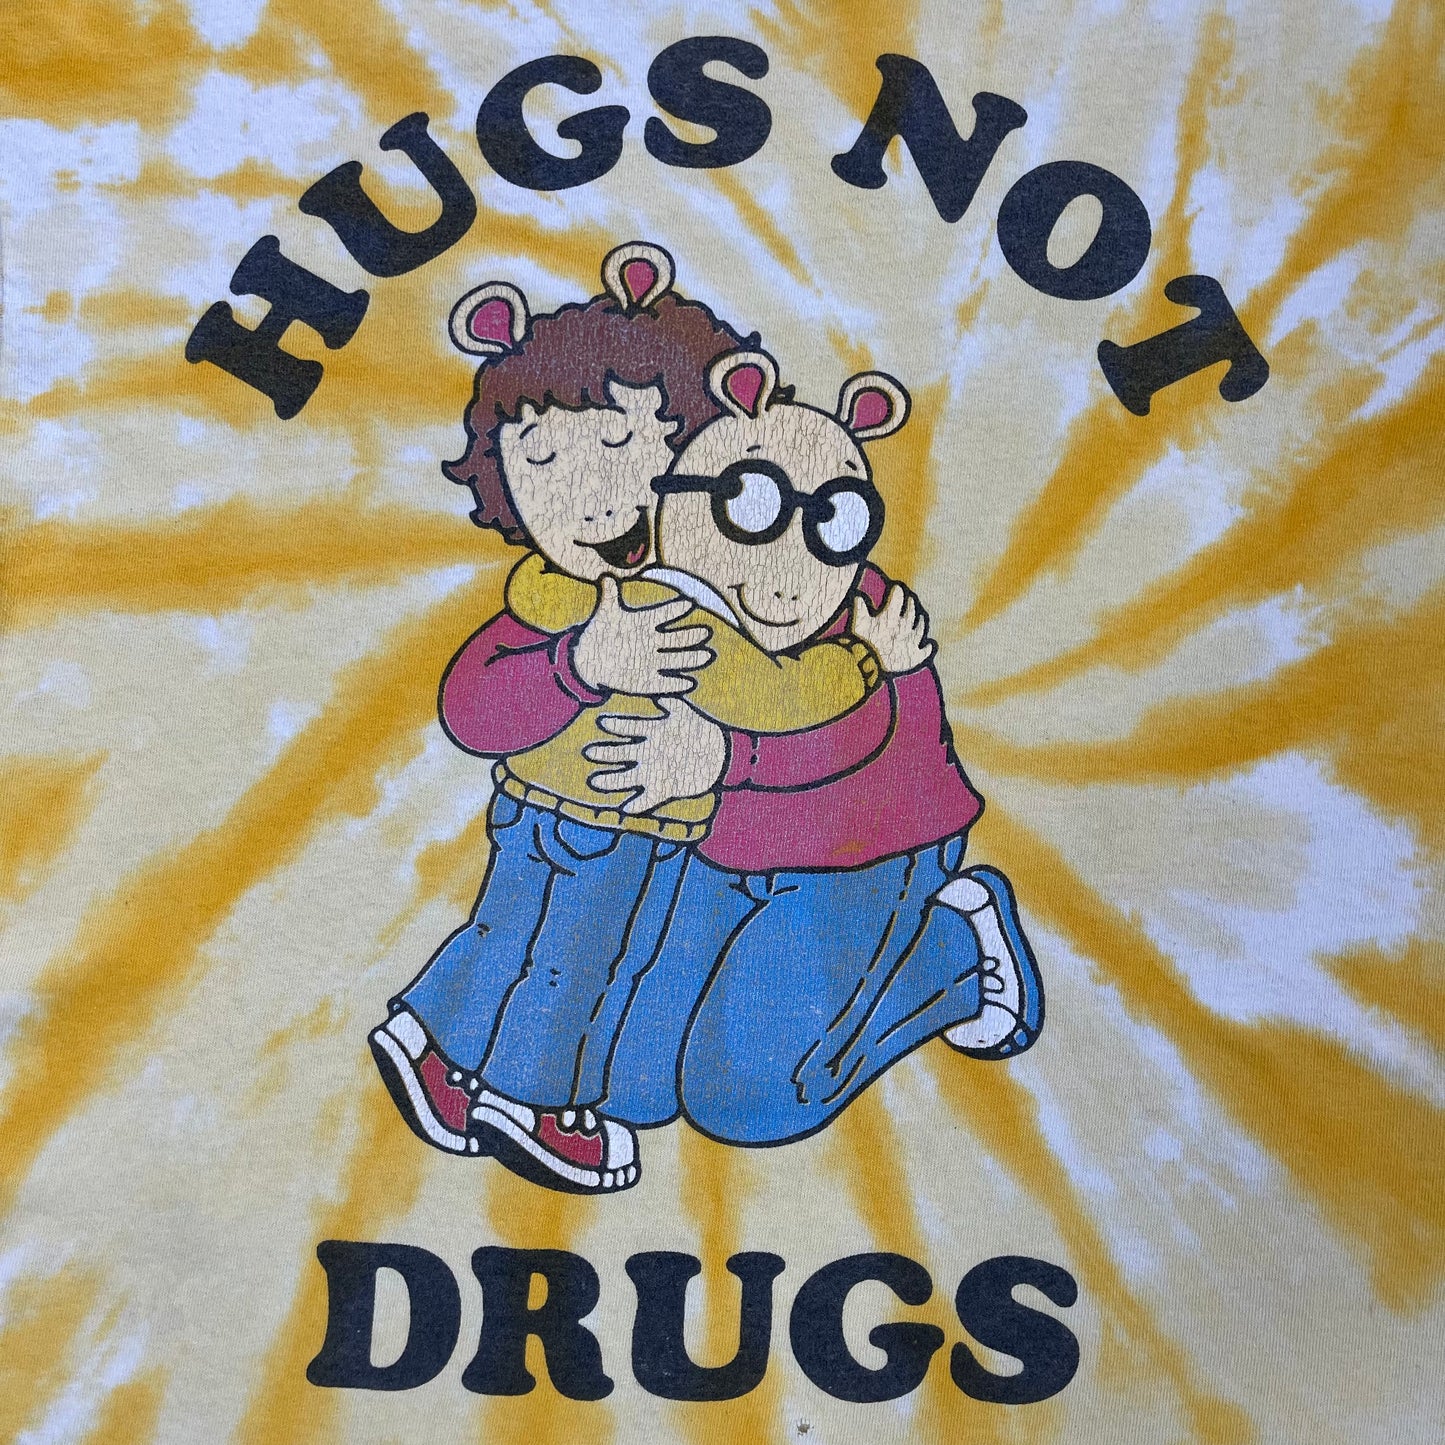 THRIFTED ARTHUR “HUGS NOT DRUGS” T-SHIRT